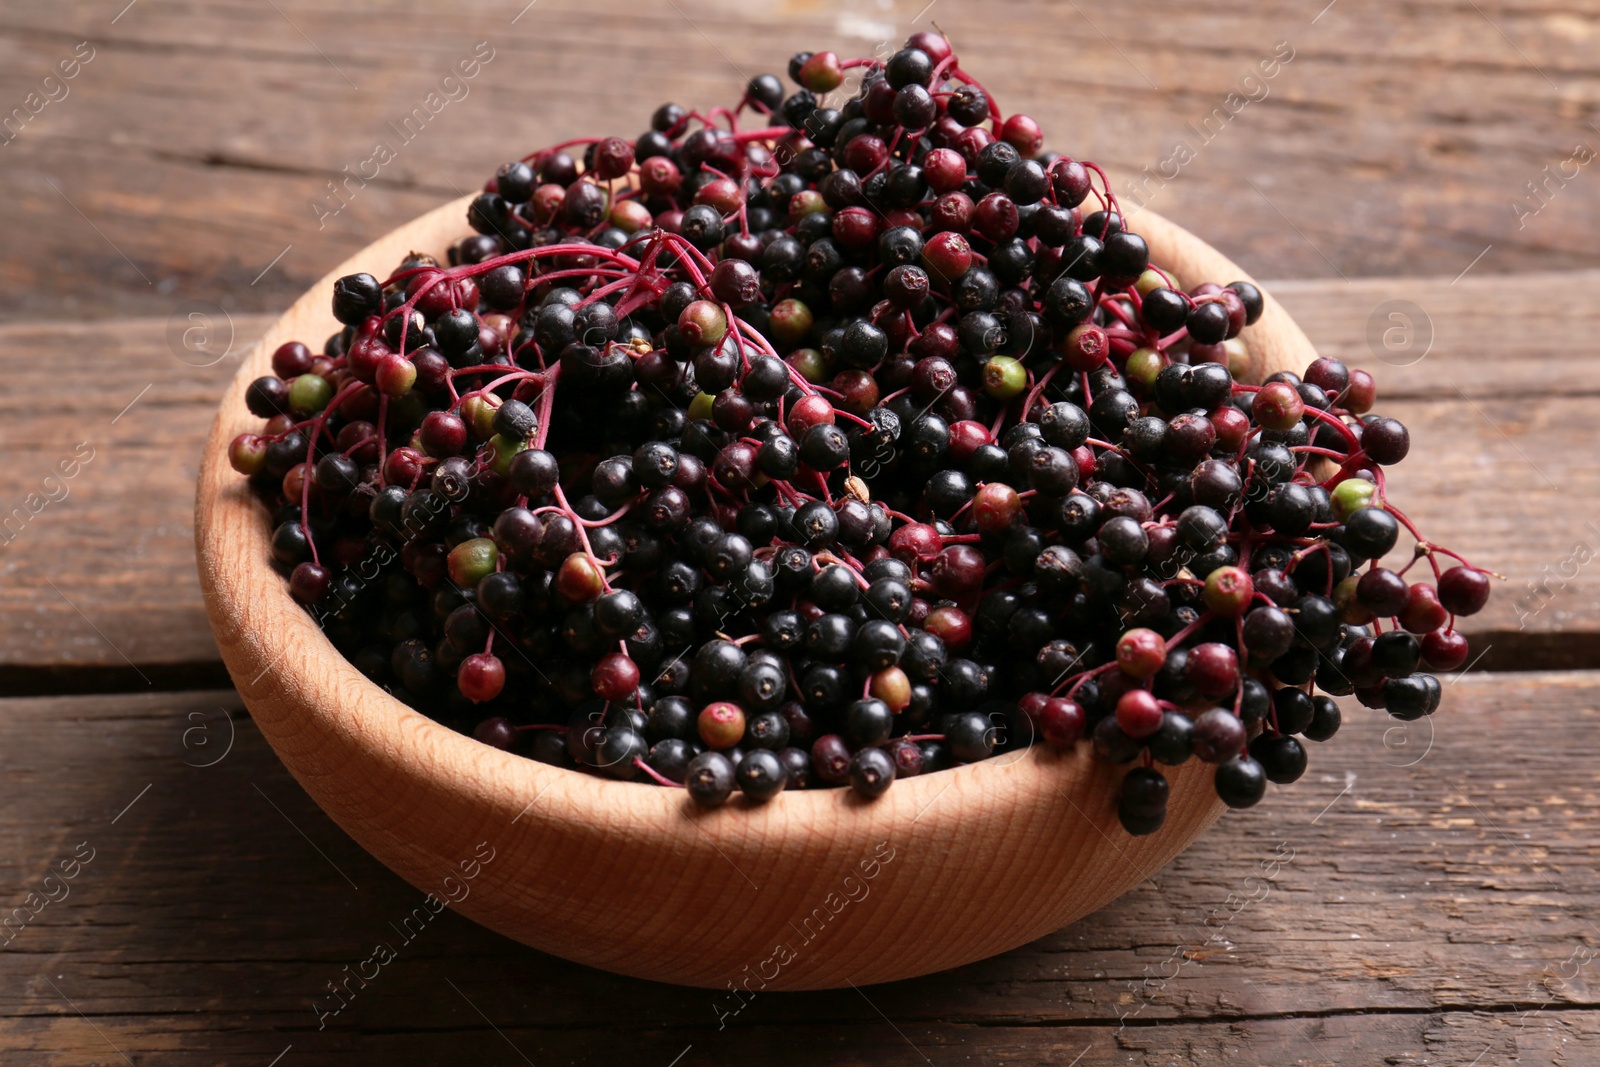 Photo of Bowl with tasty elderberries (Sambucus) on wooden table, closeup